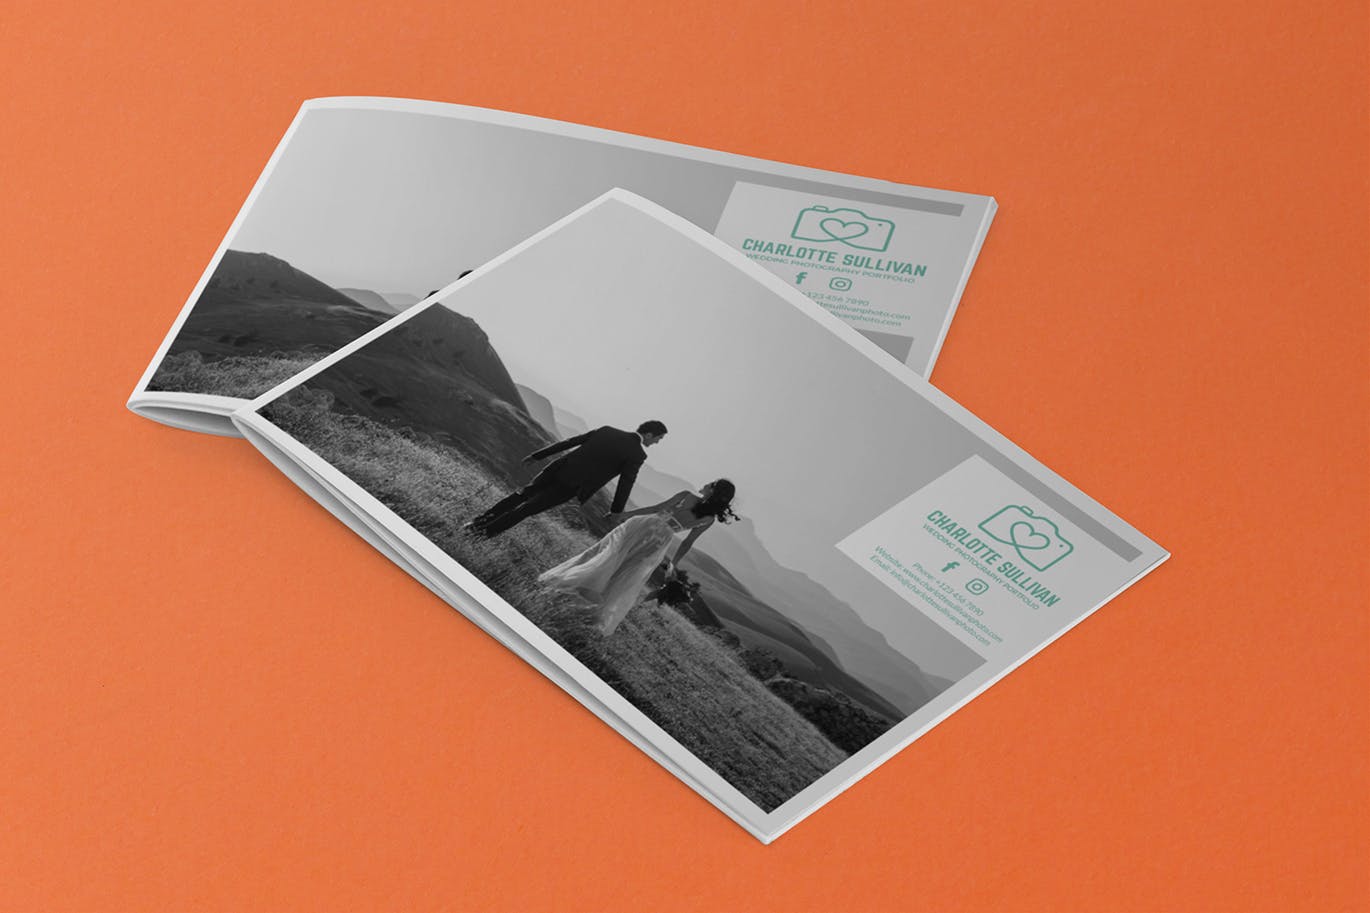 美国信纸尺寸宣传册叠放效果图样机素材库精选 US Half Letter 2 Covers Brochure Mockup插图(2)